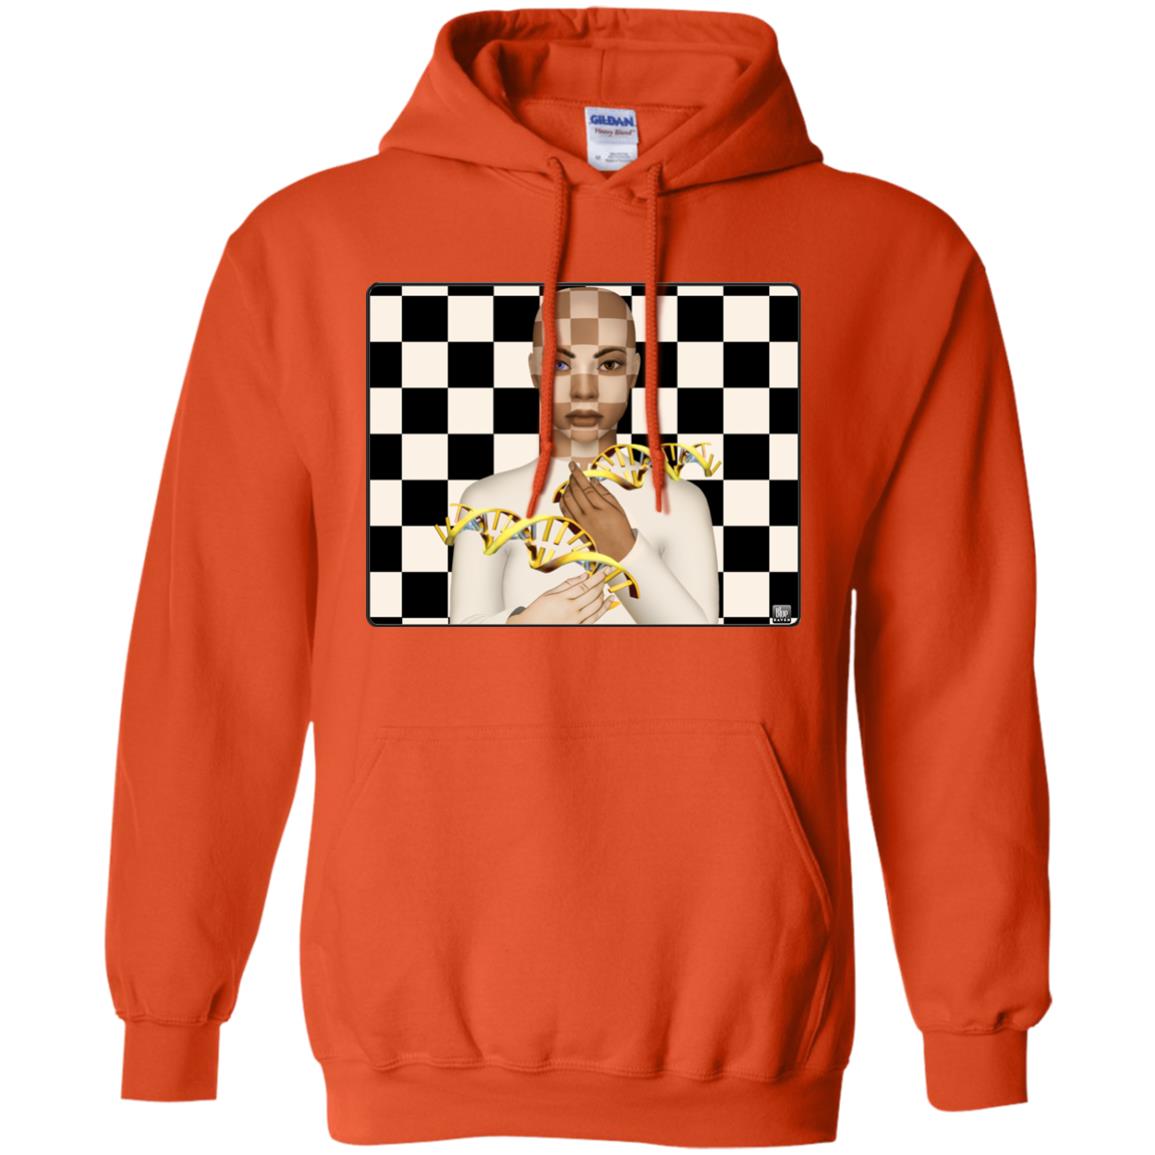 IT'S ONLY DNA - hoodie - Adult Hoodie